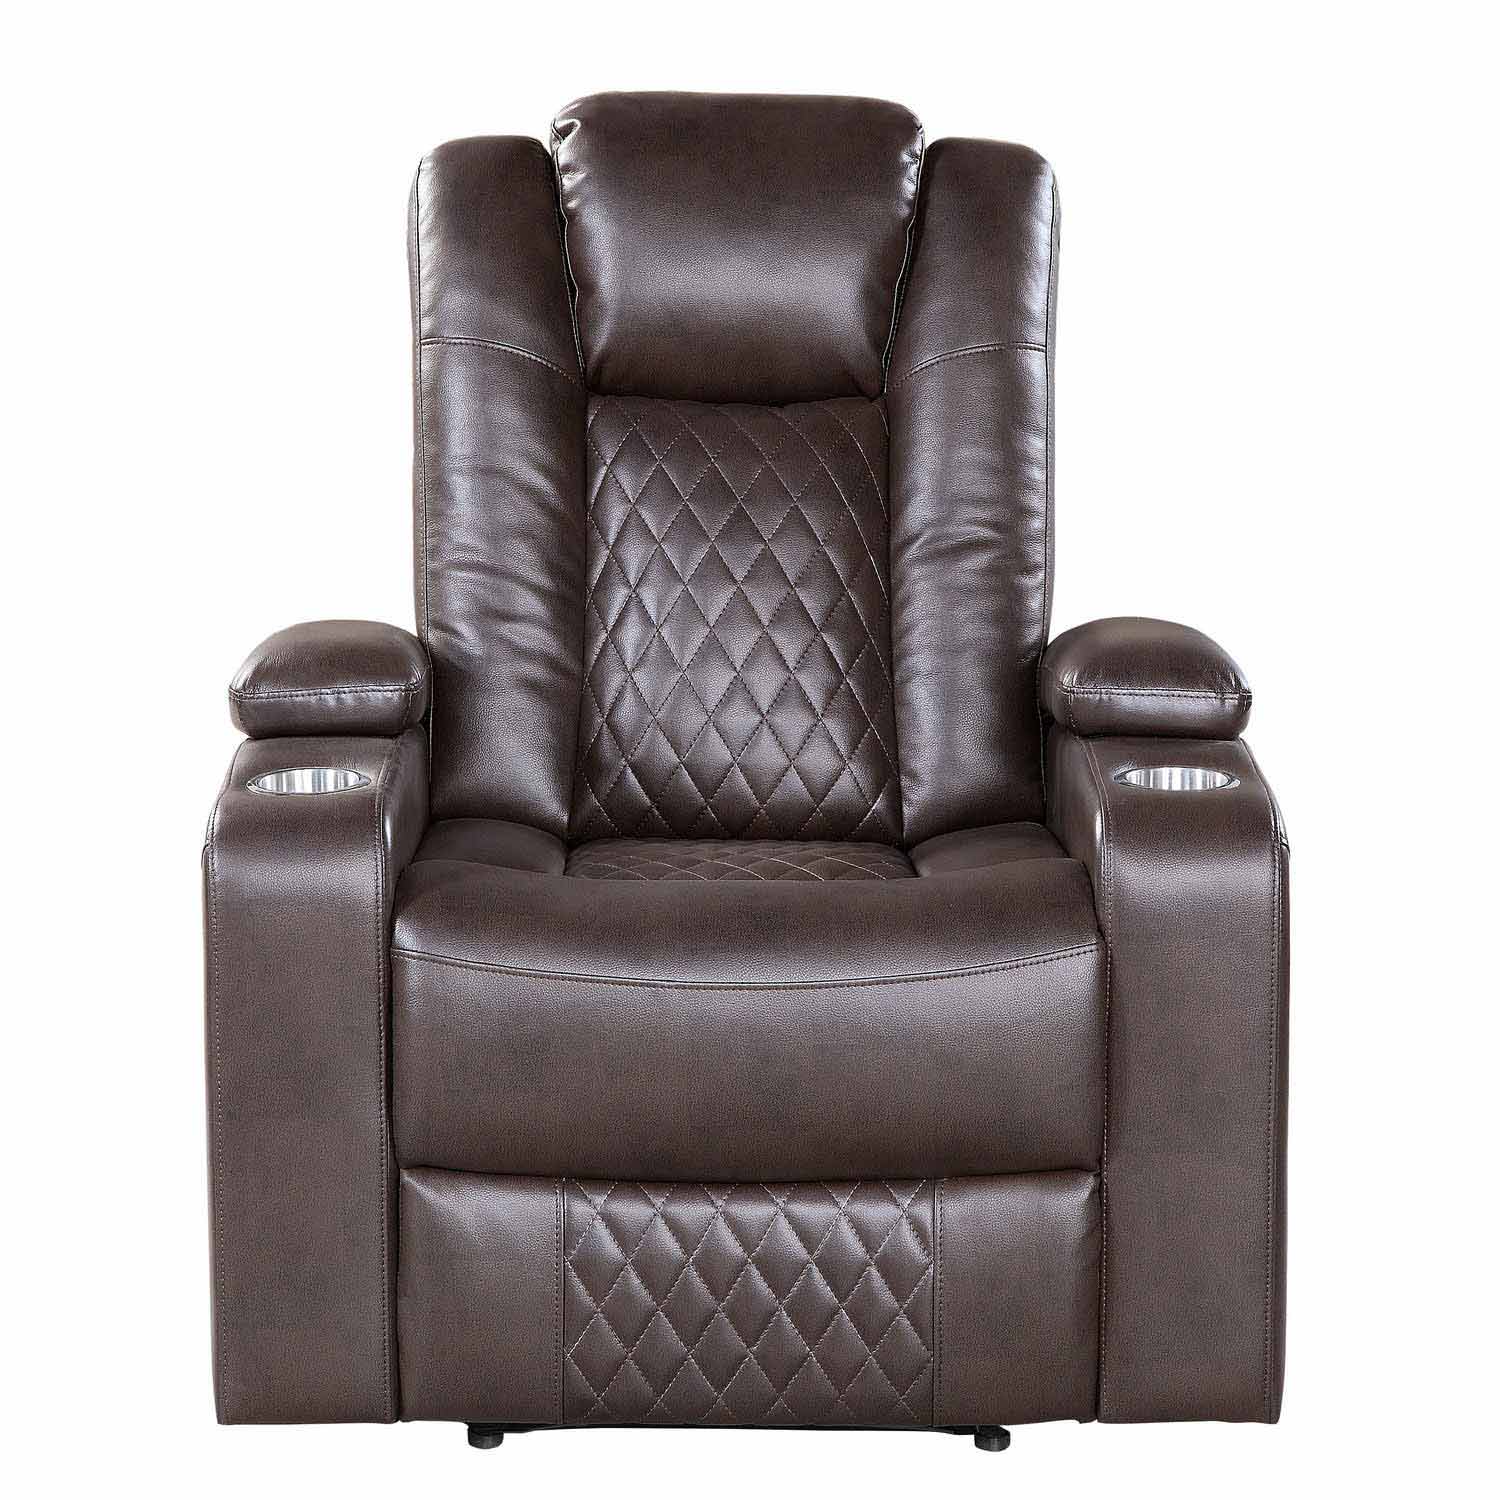 Homelegance Caelan Power Reclining Chair - Dark brown